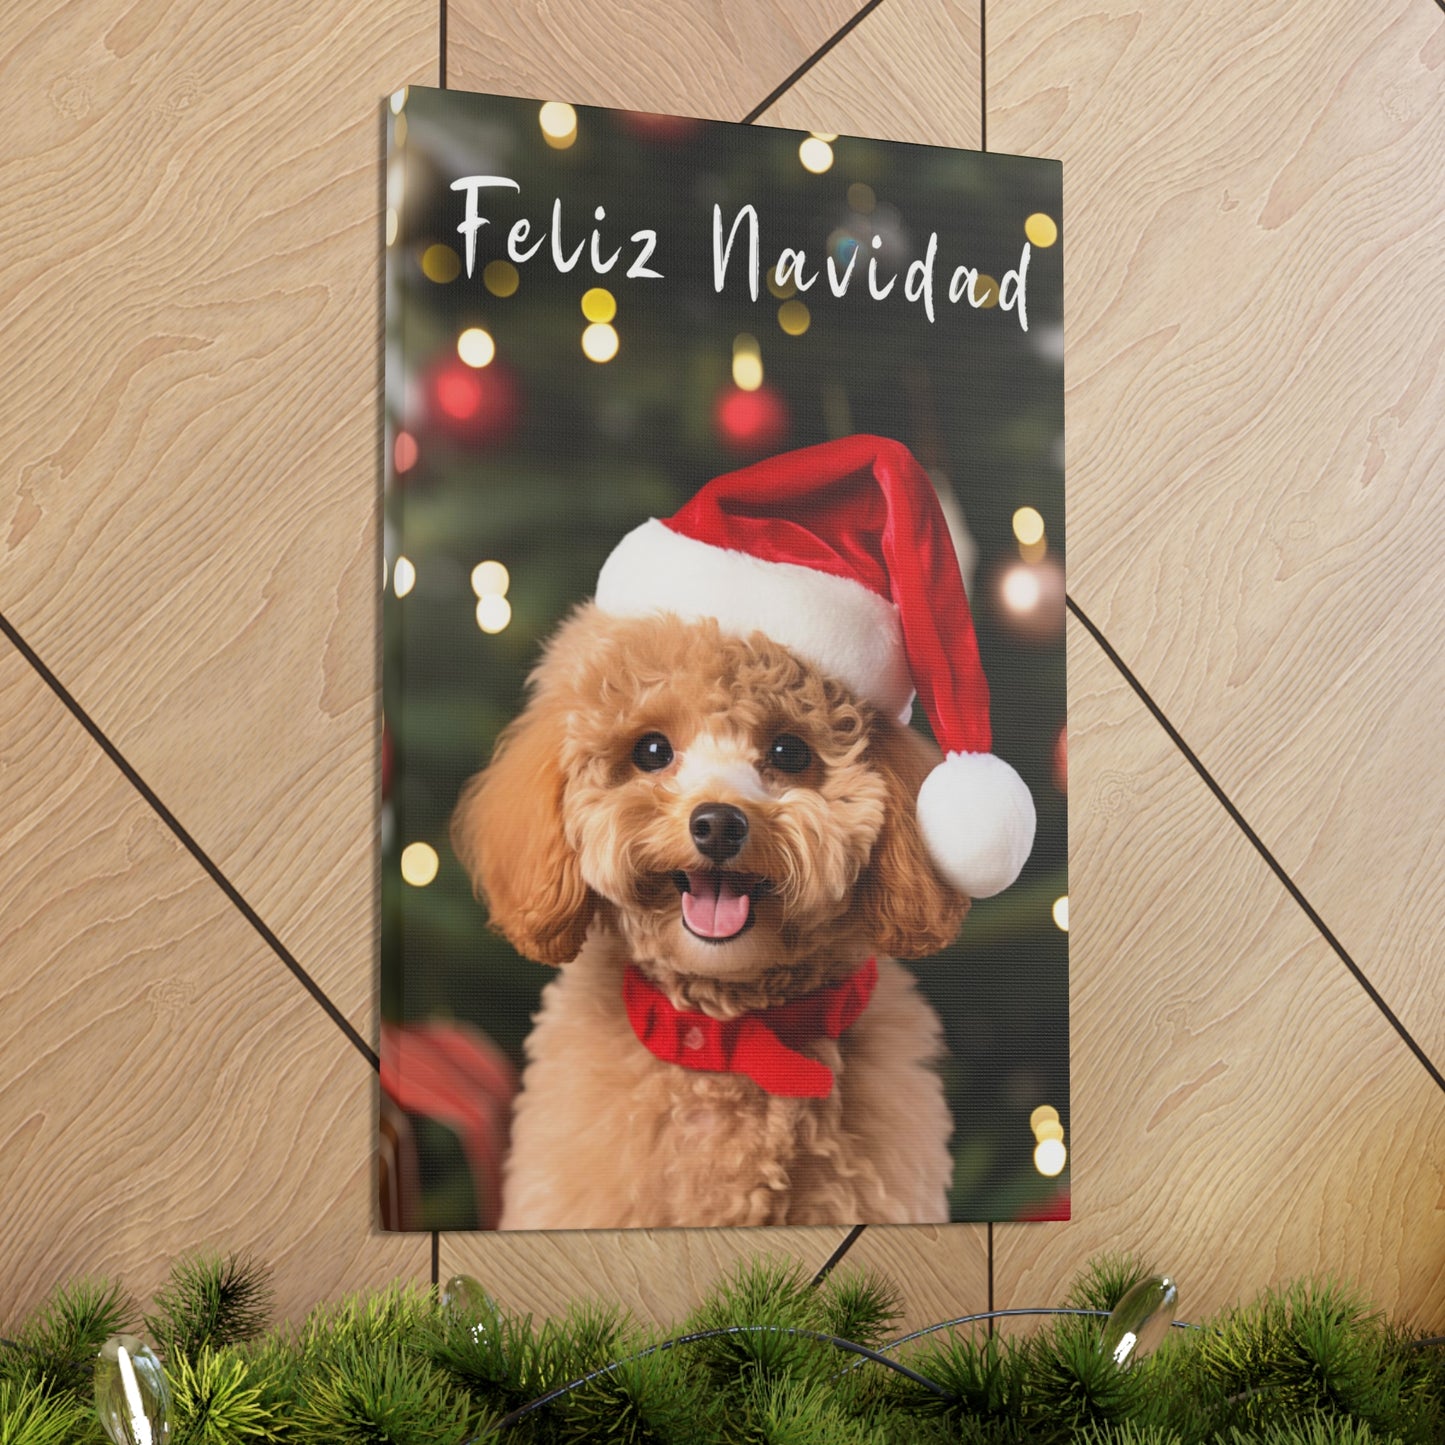 Christmas Poodles with Santa hat decor ideas